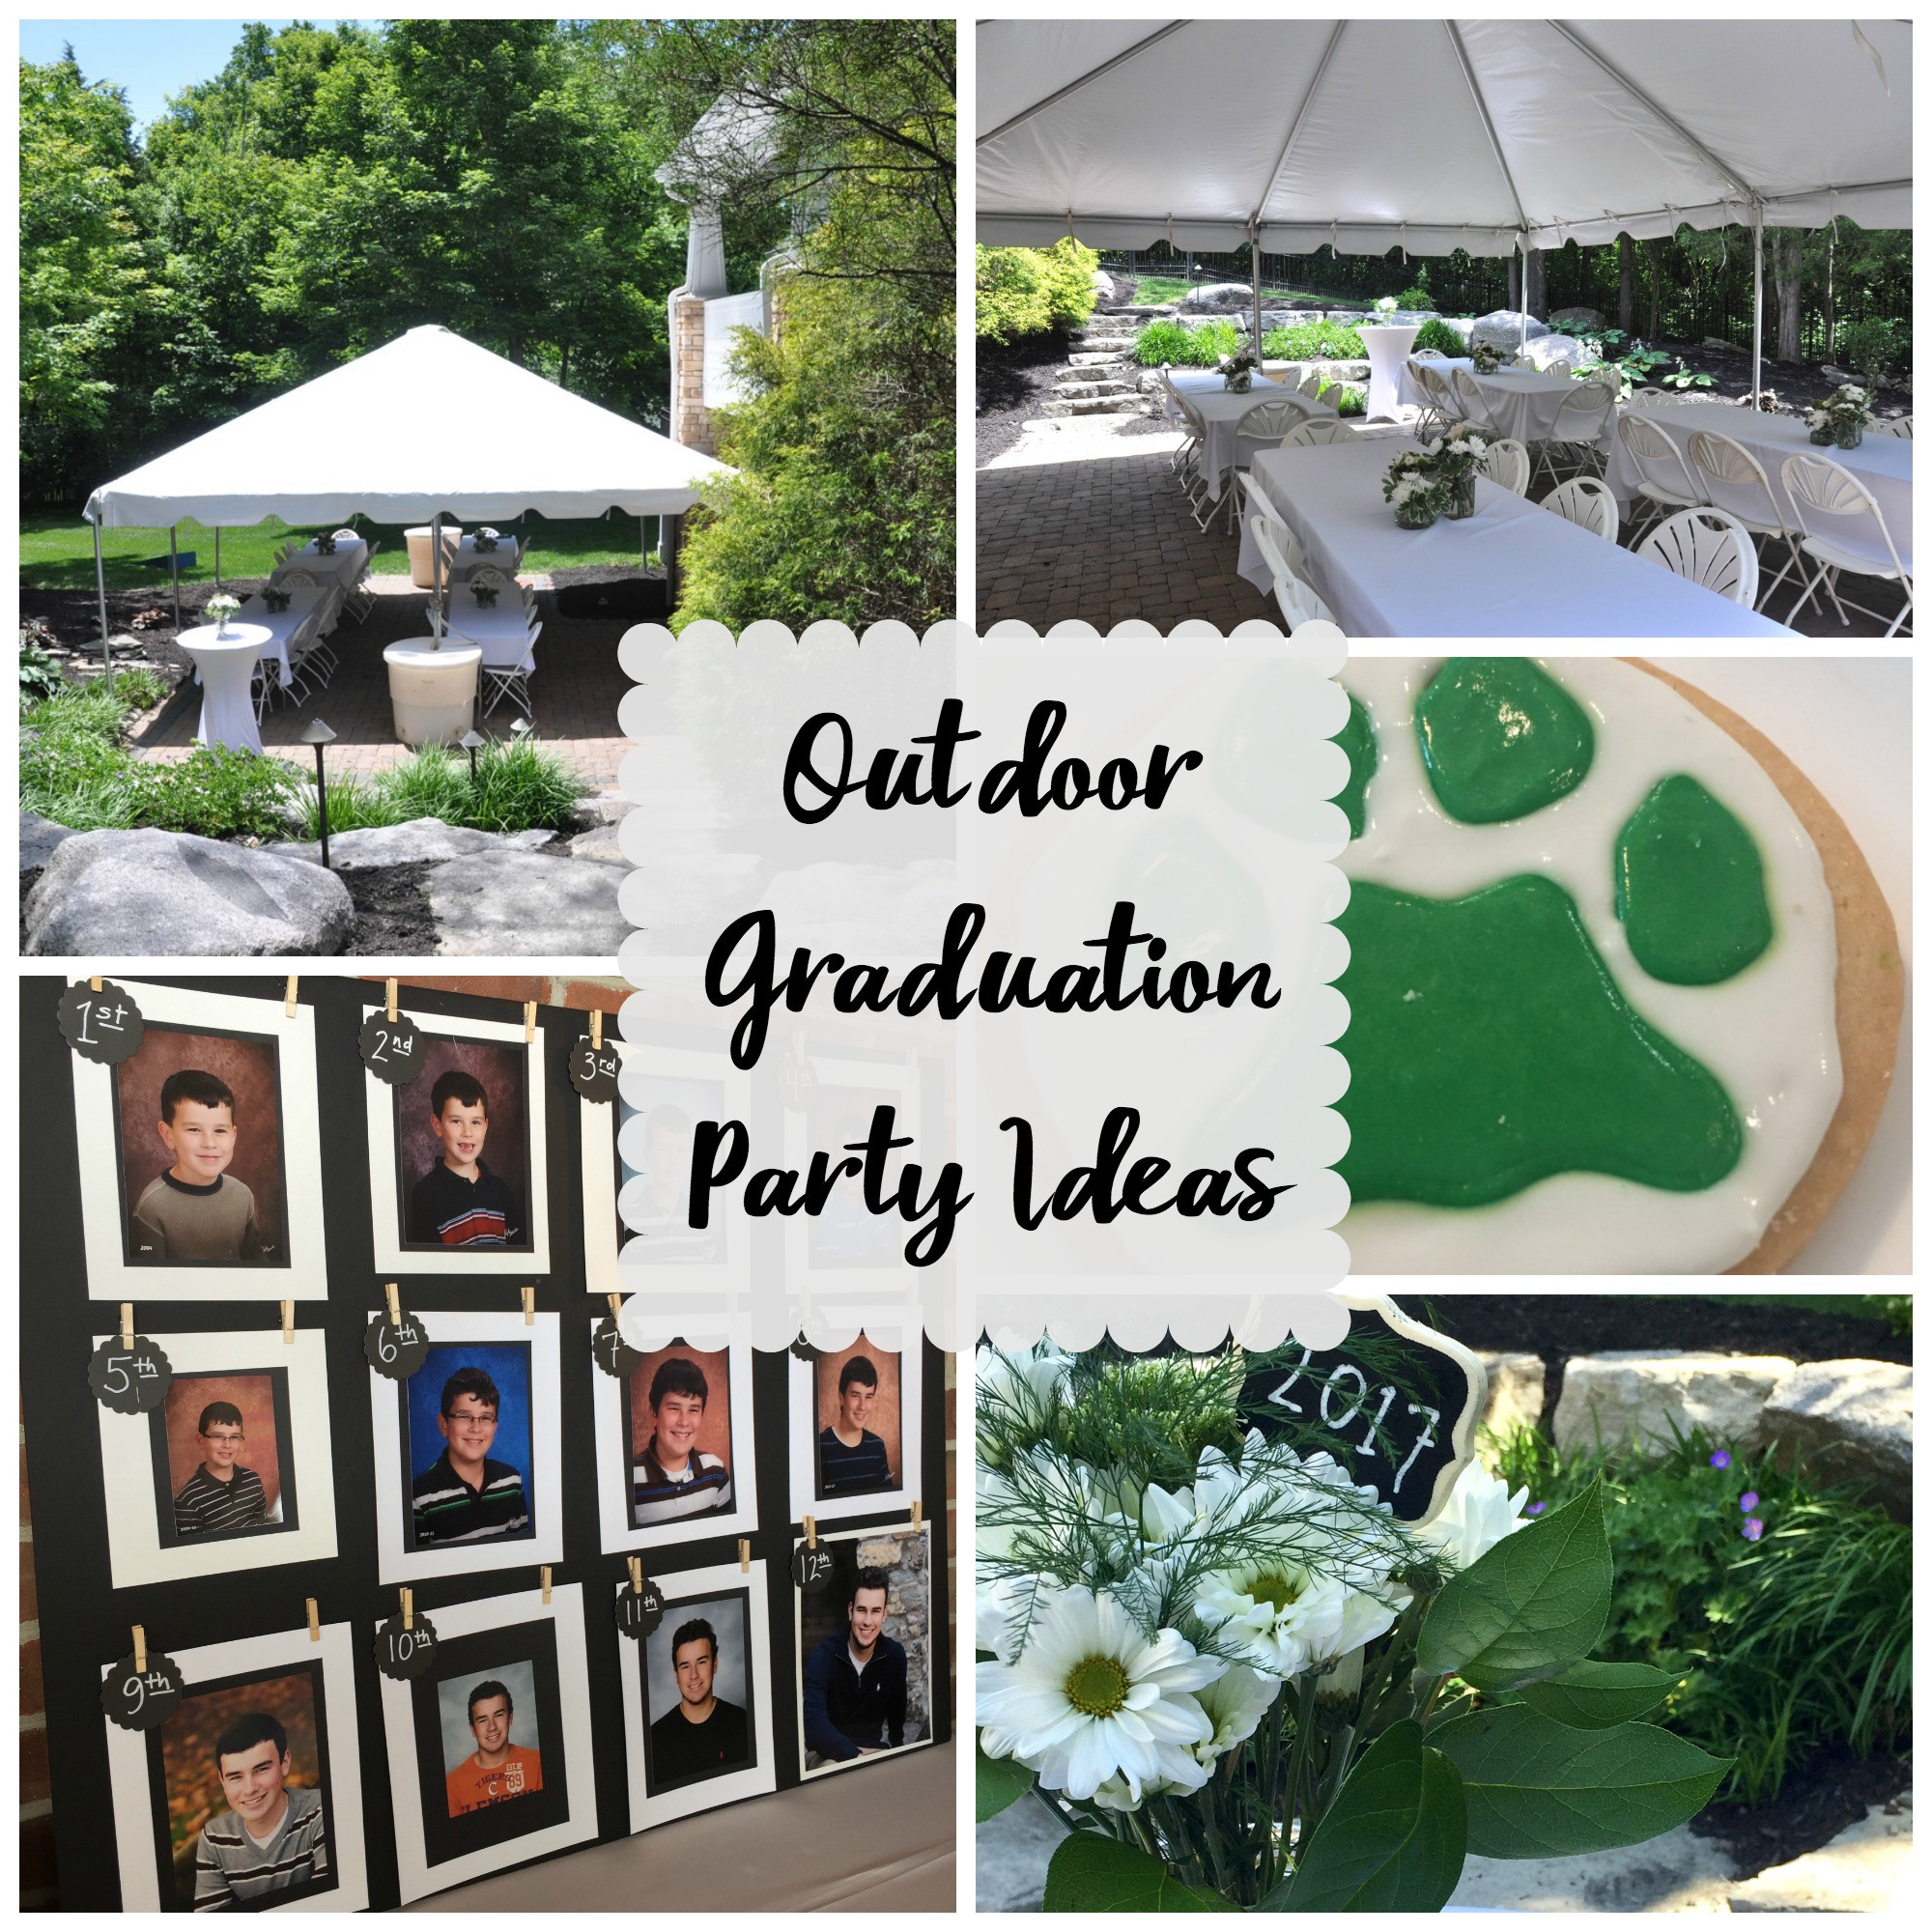 University Graduation Party Ideas
 Outdoor Graduation Party Evolution of Style